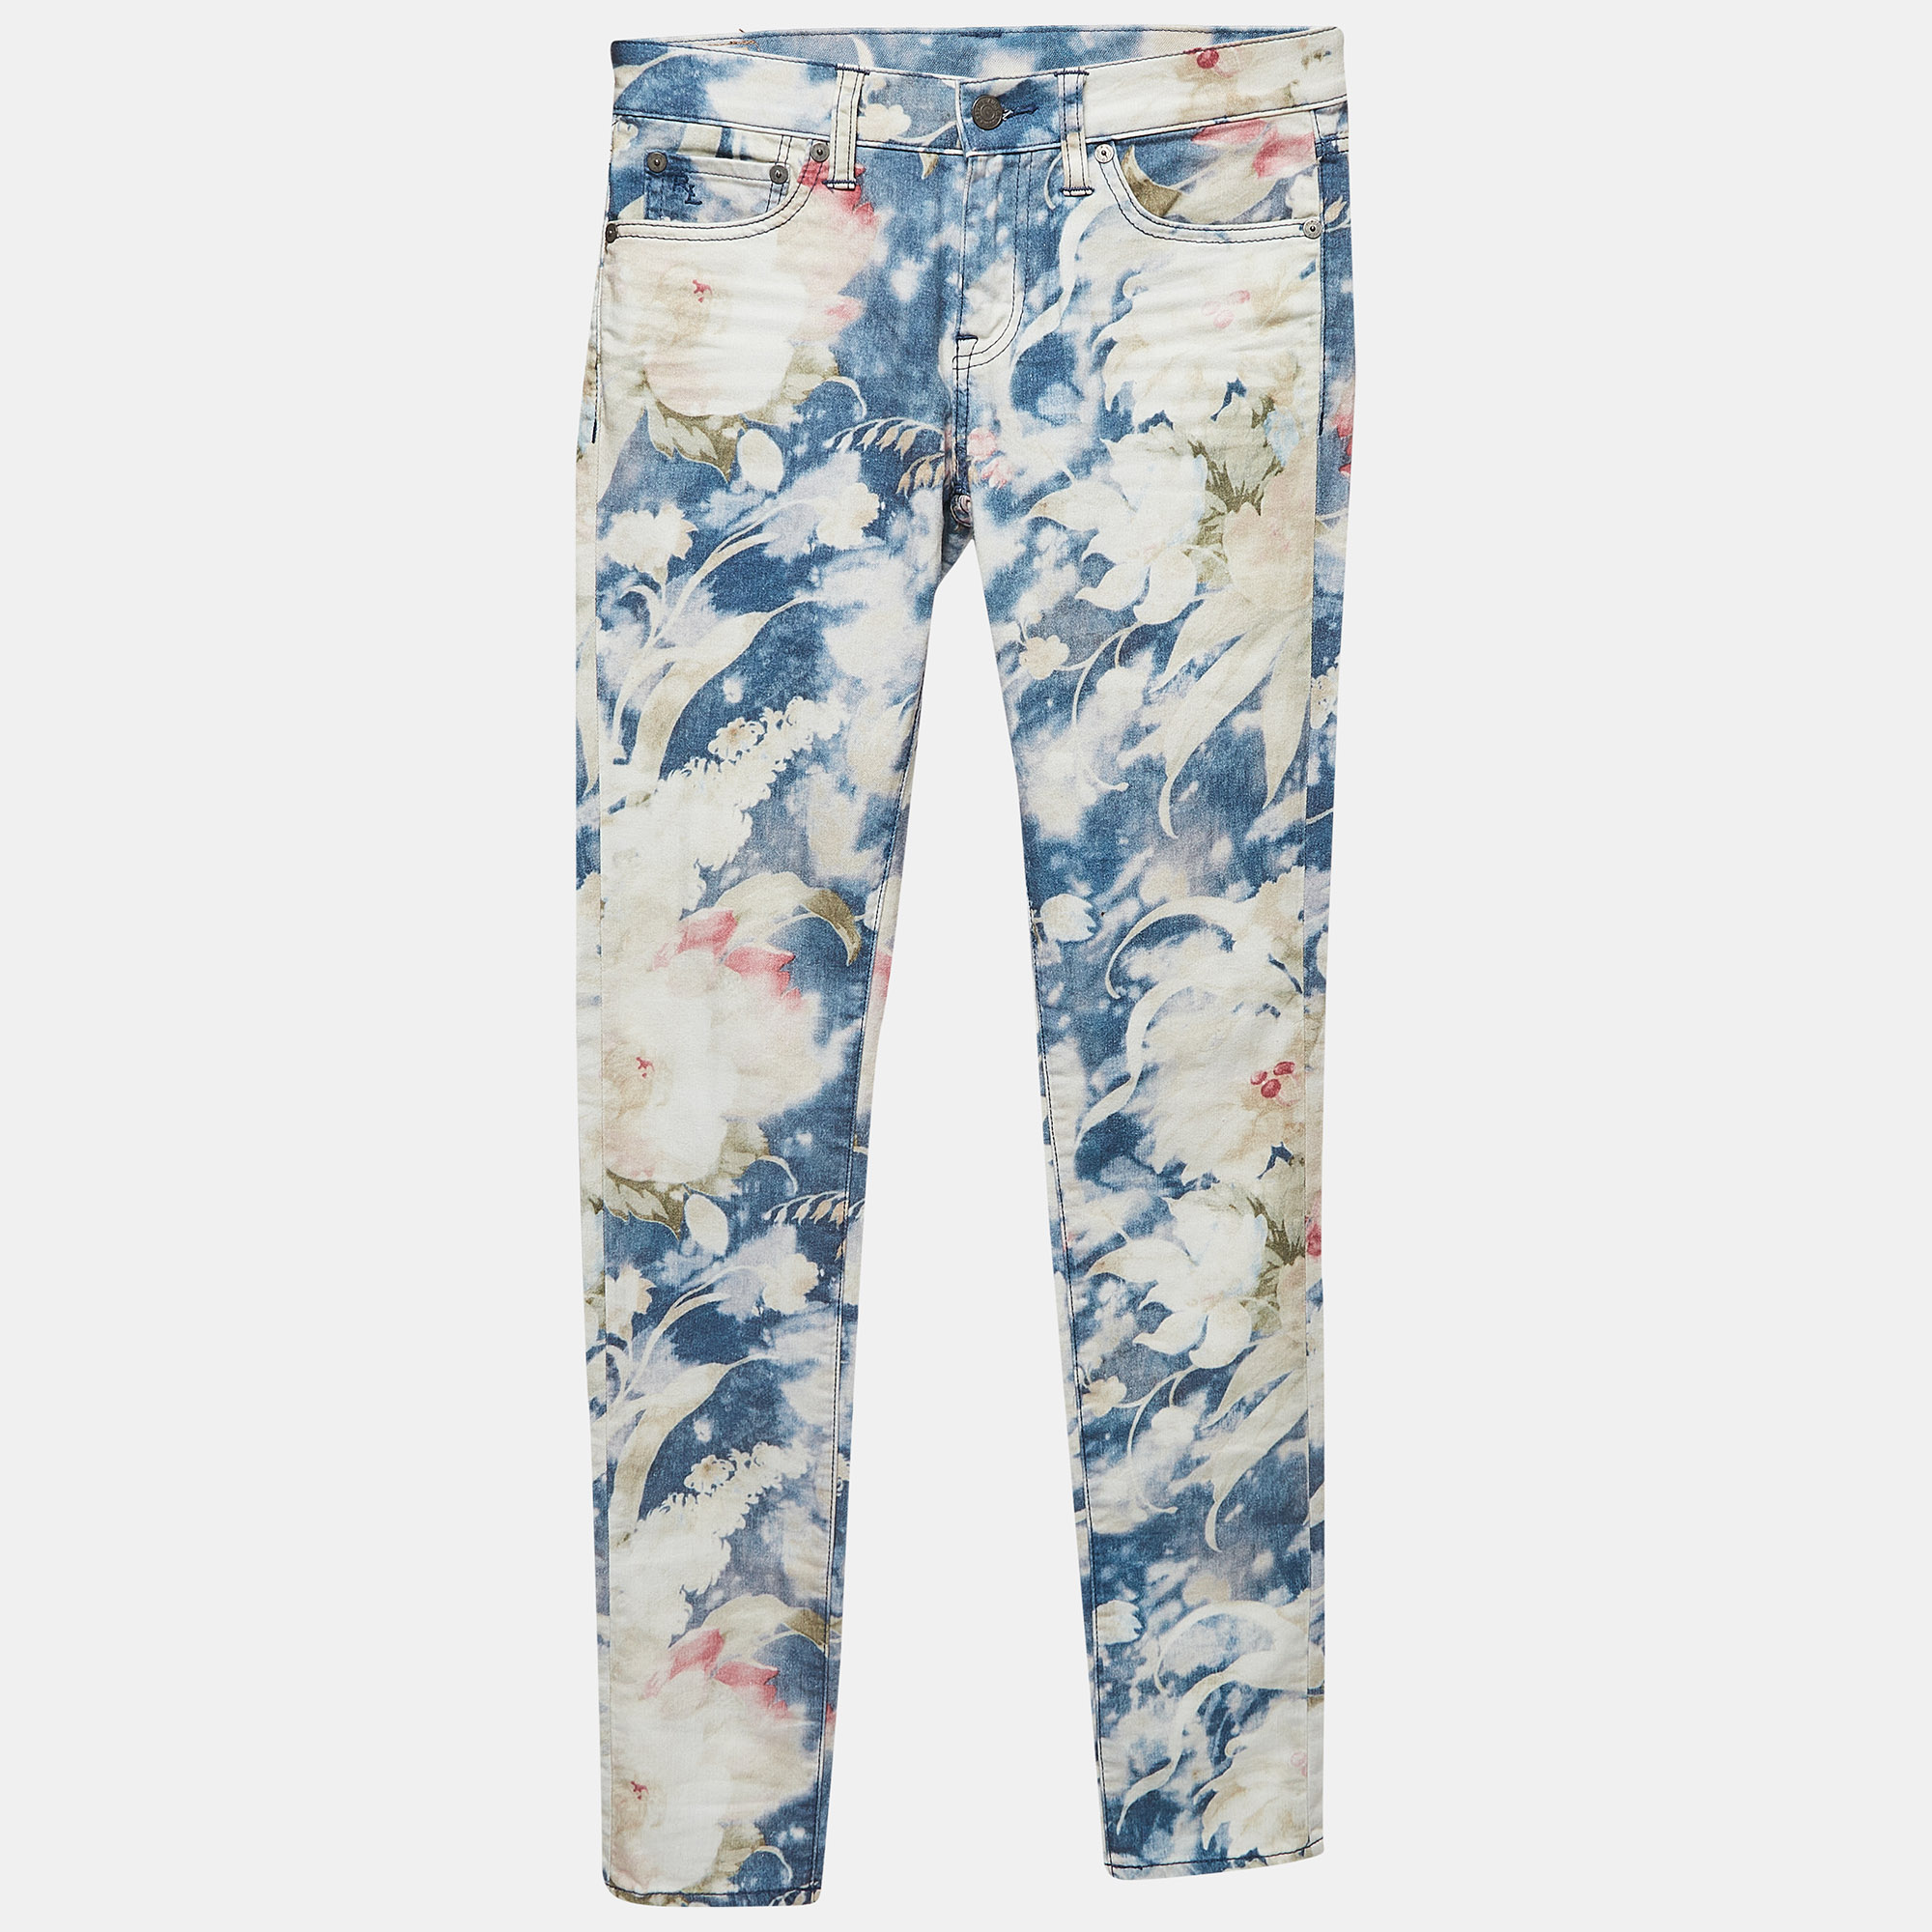 Polo ralph lauren blue floral print stretch denim jeans s waist 27"